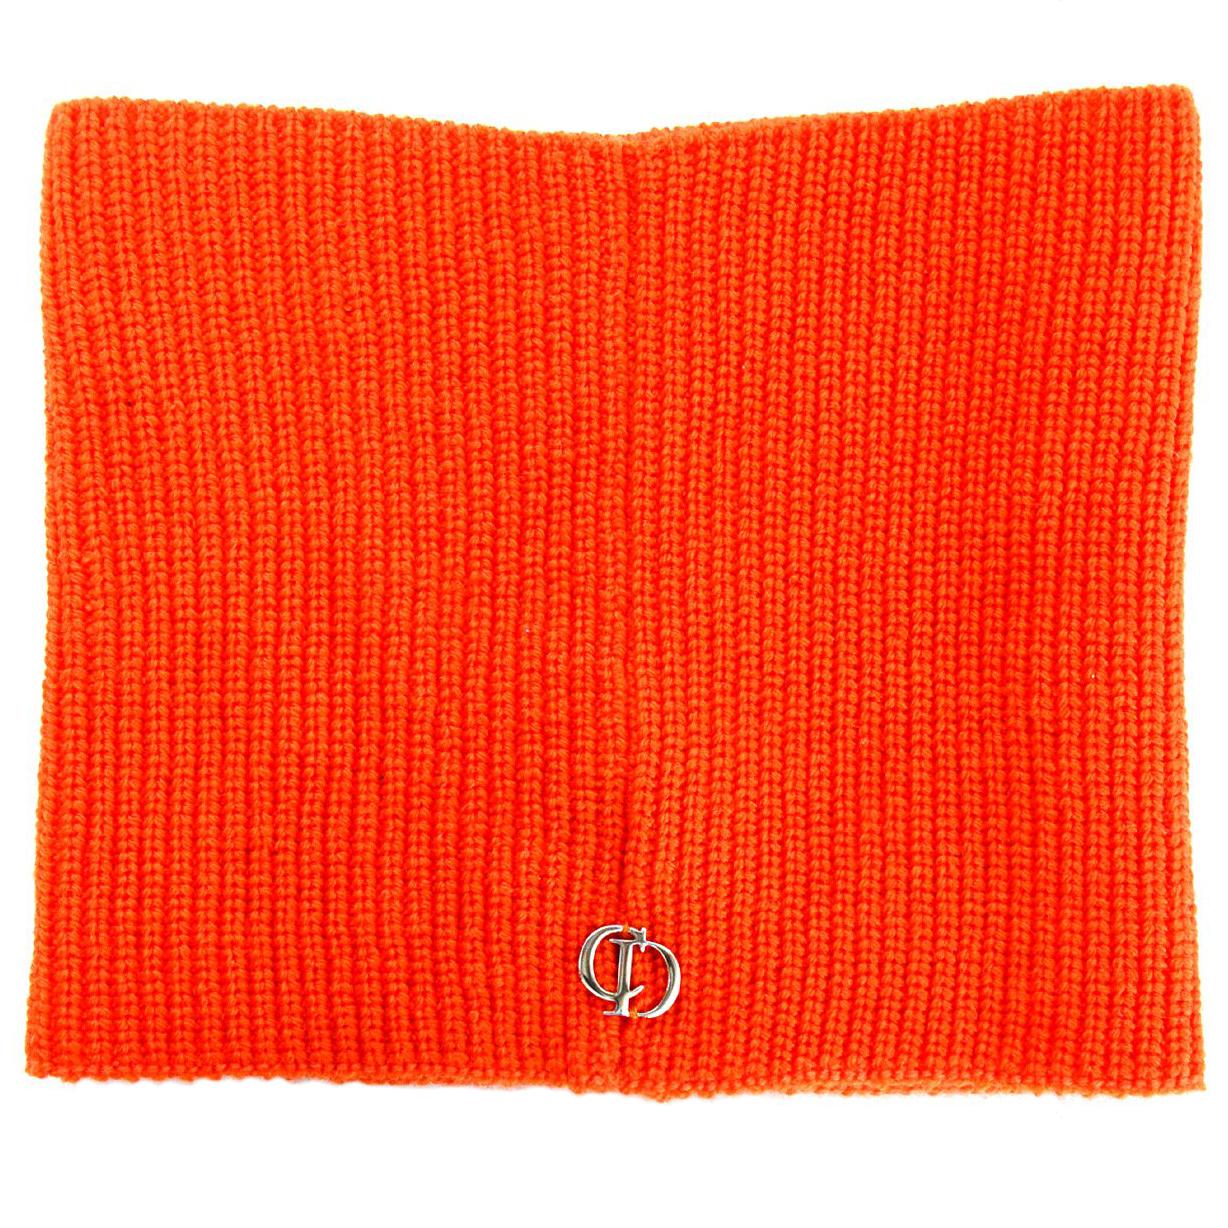 Christian Dior 2018 Unisex Bright Neon Orange Wool Neck Warmer NWT rt. $450